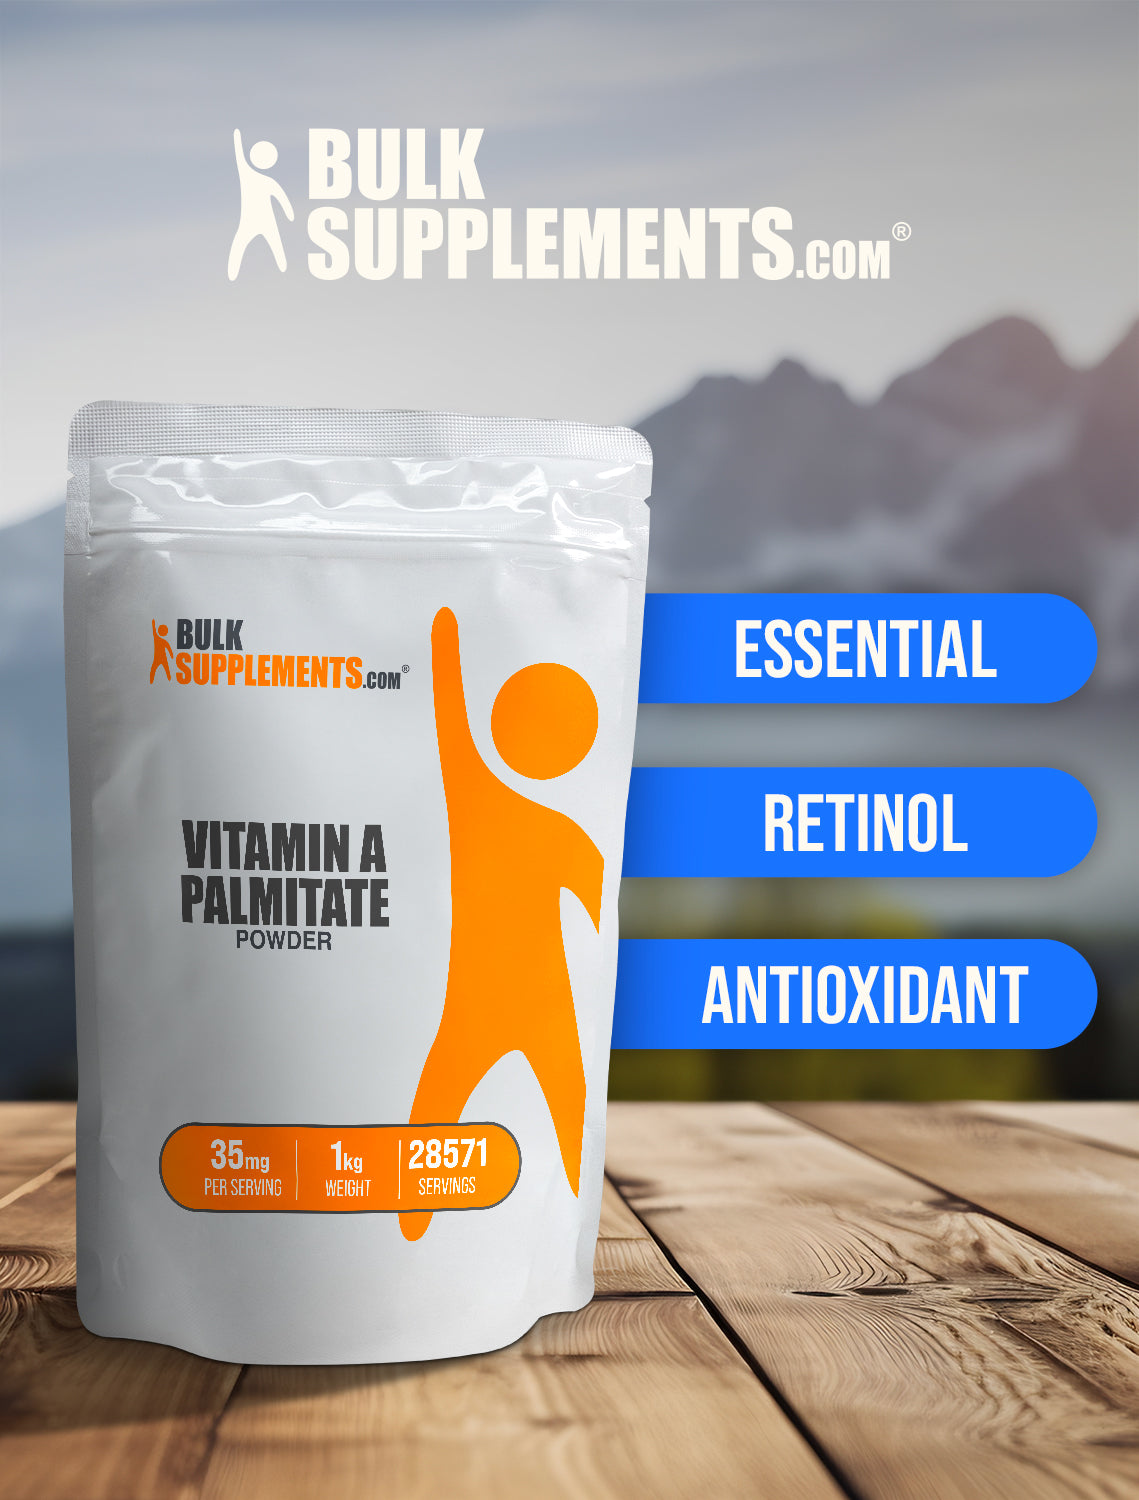 Vitamin A Palmitate powder keyword image 1kg